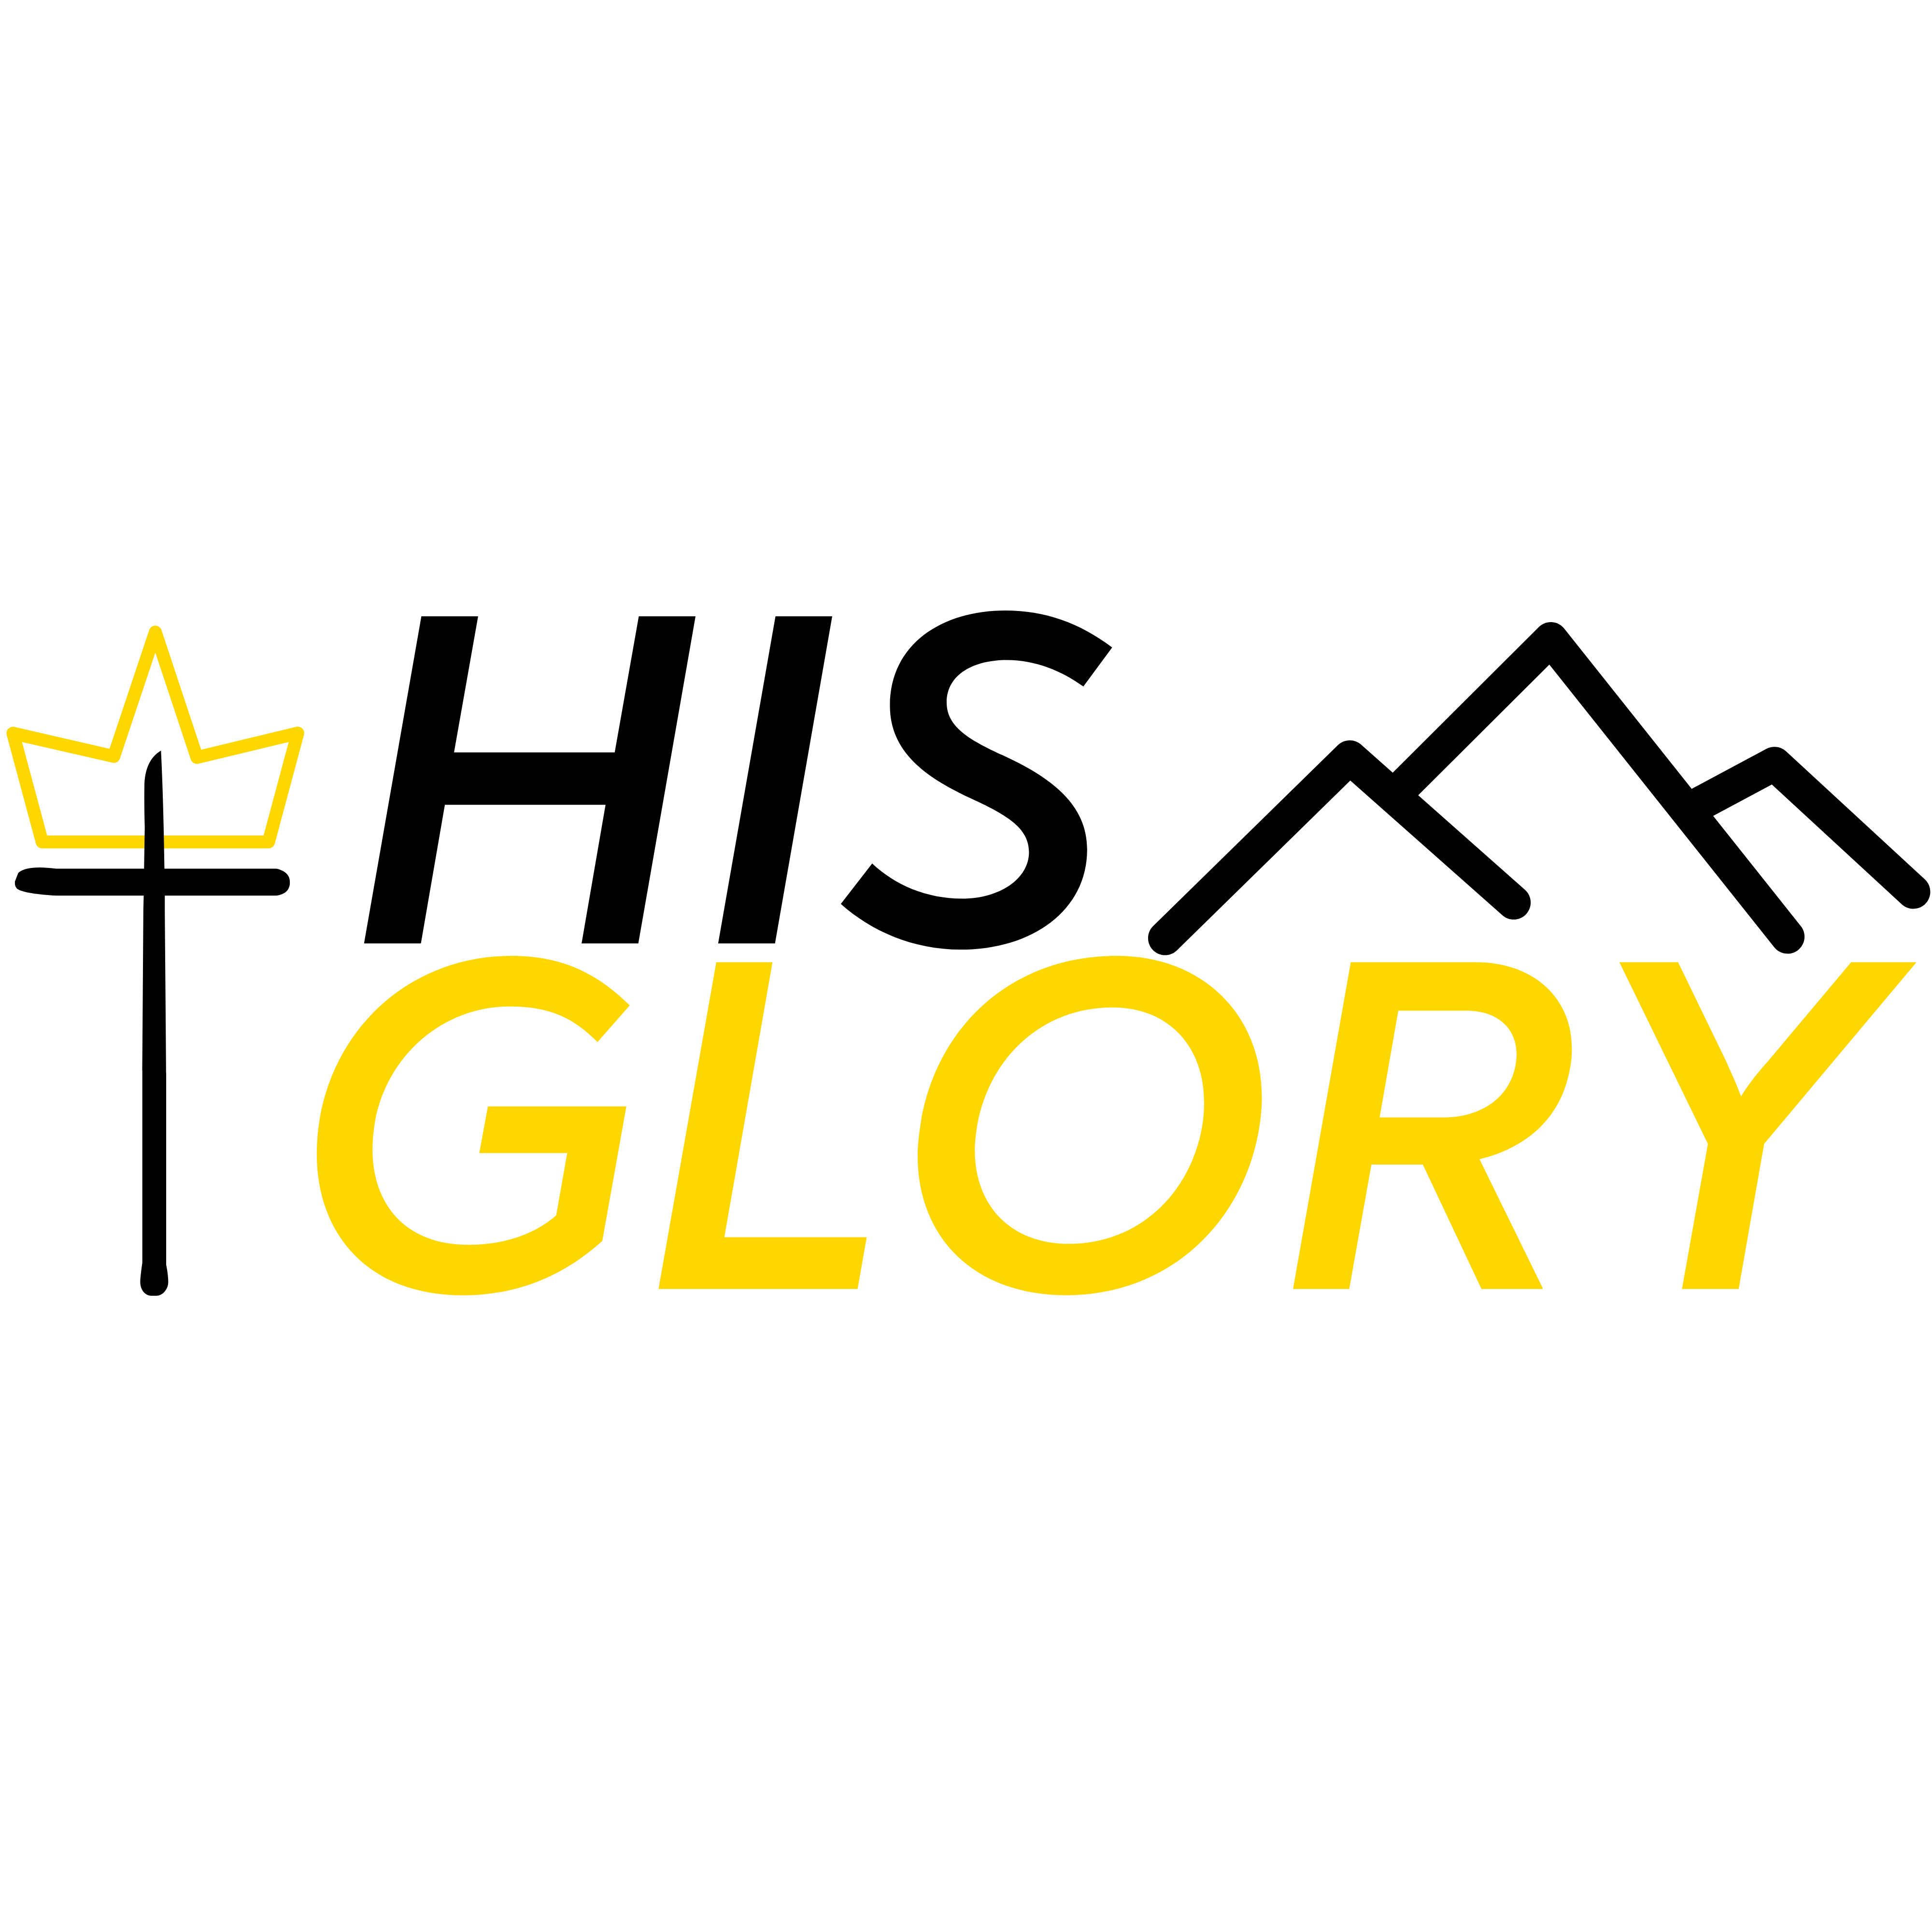 His Glory Co.